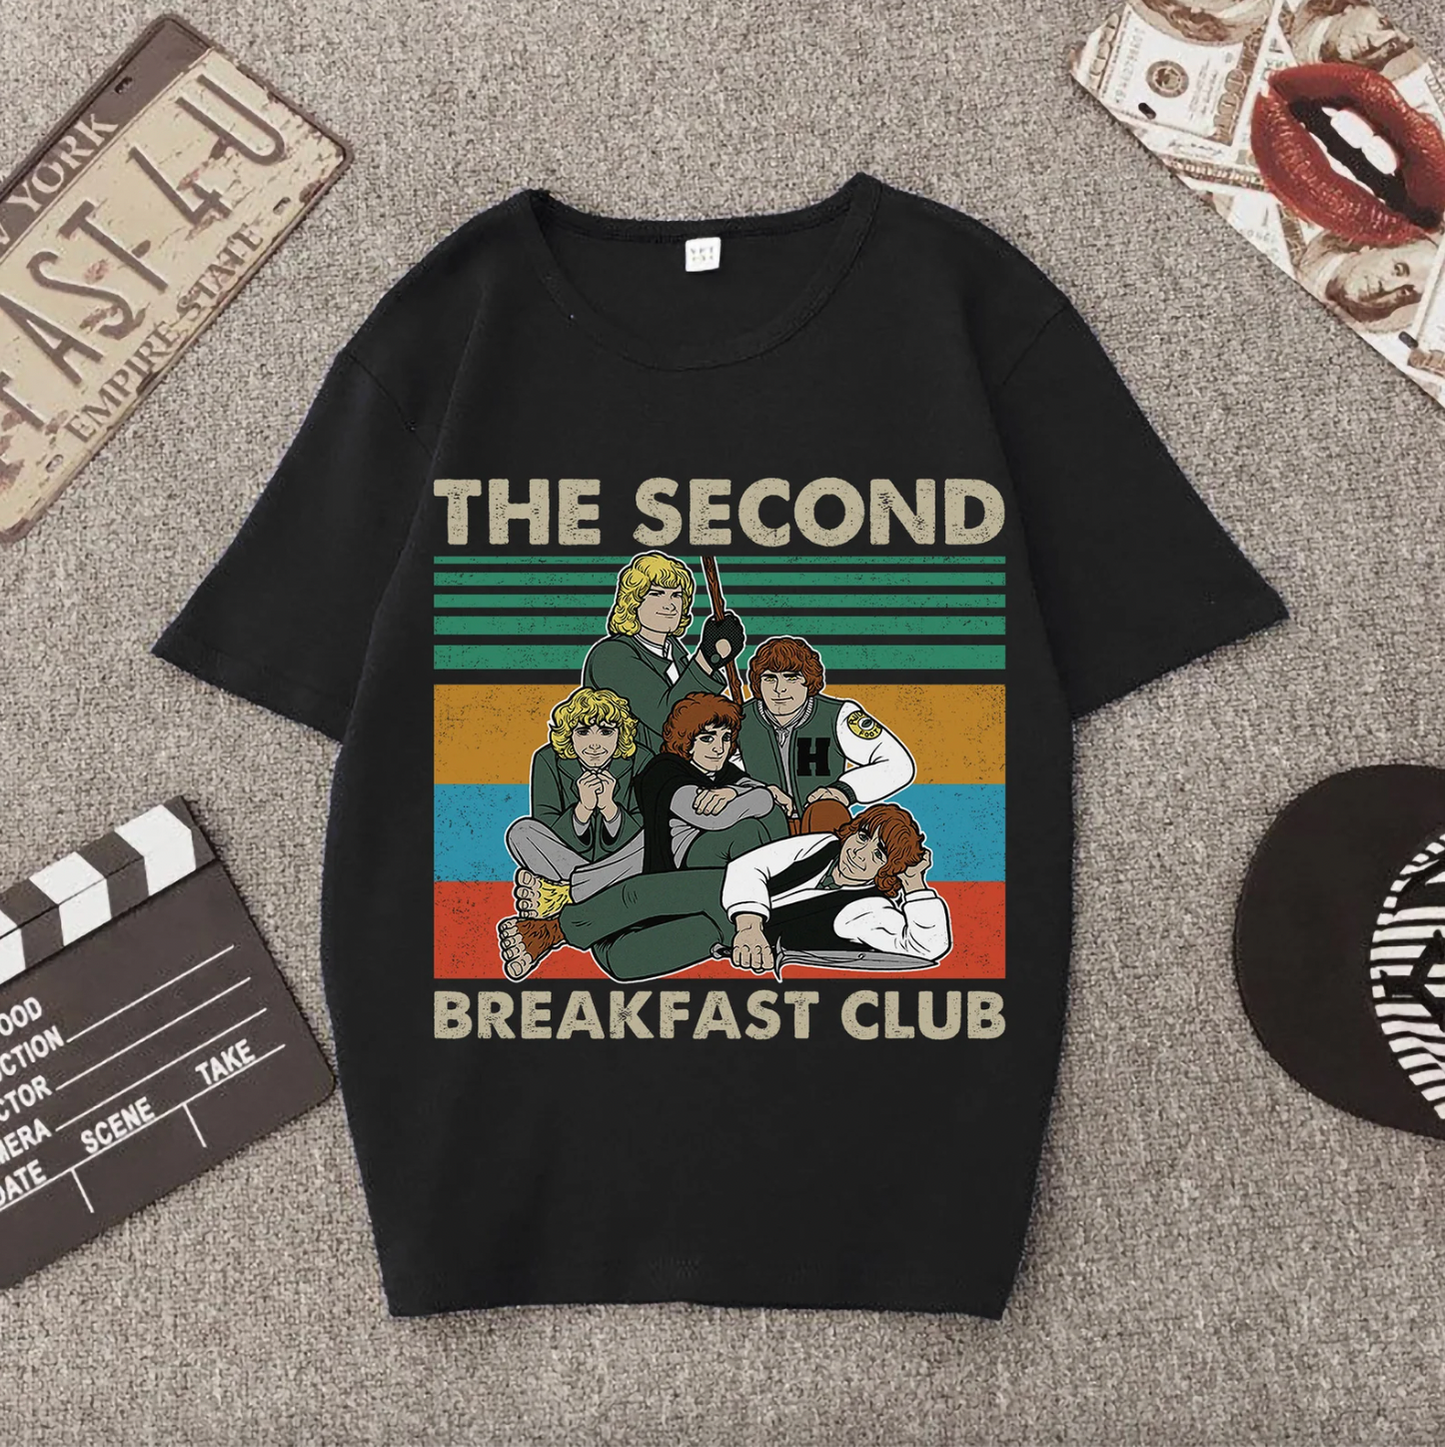 The Second Breakfast Club T-shirt